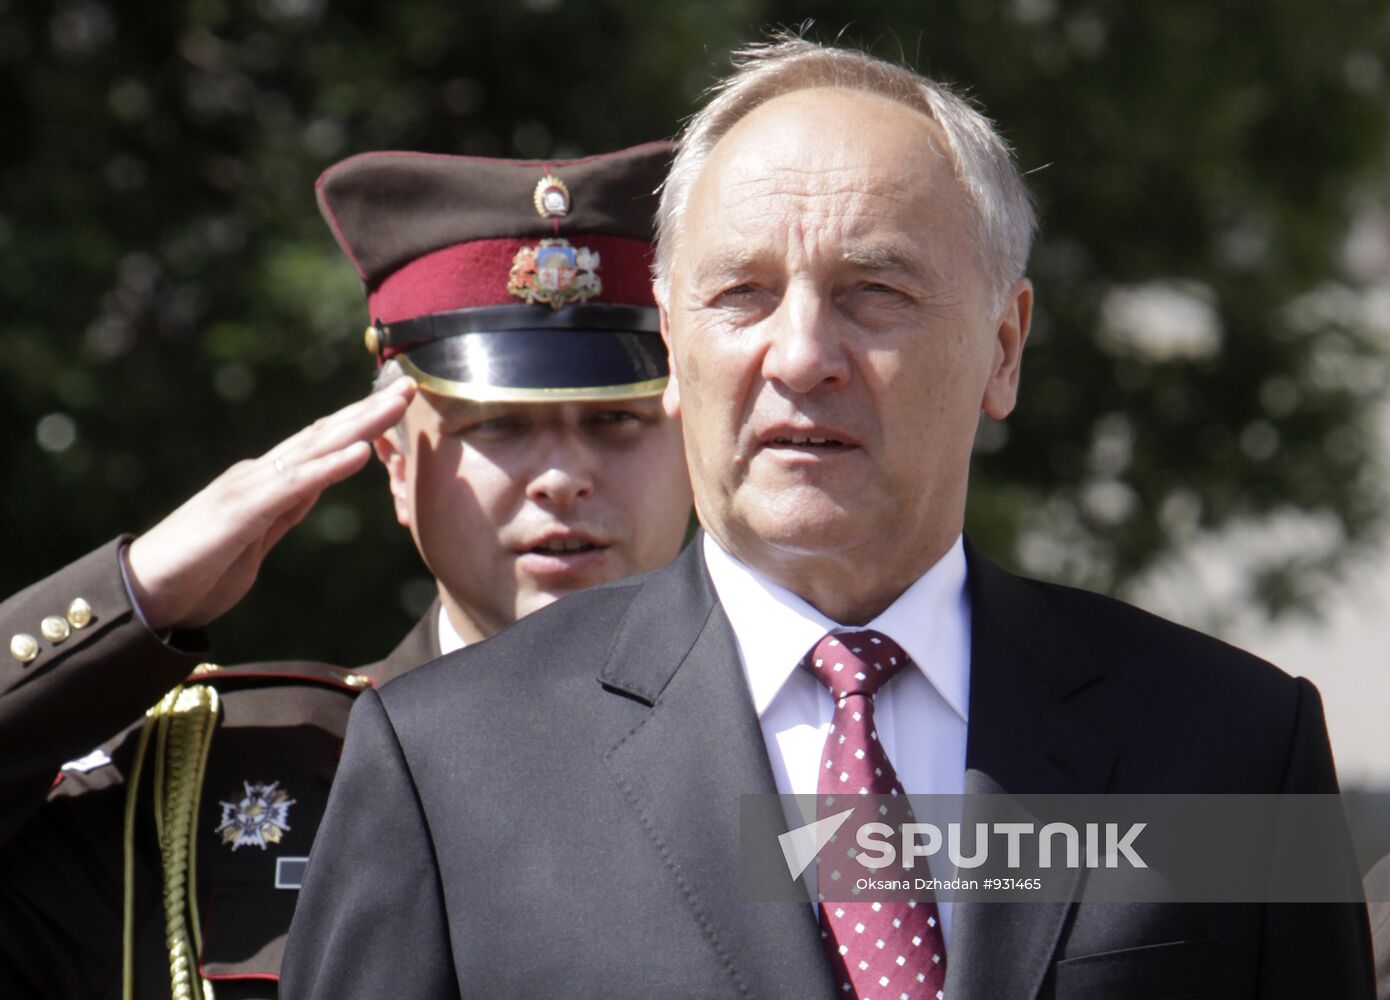 Latvia's new president, Andris Berzins, sworn in